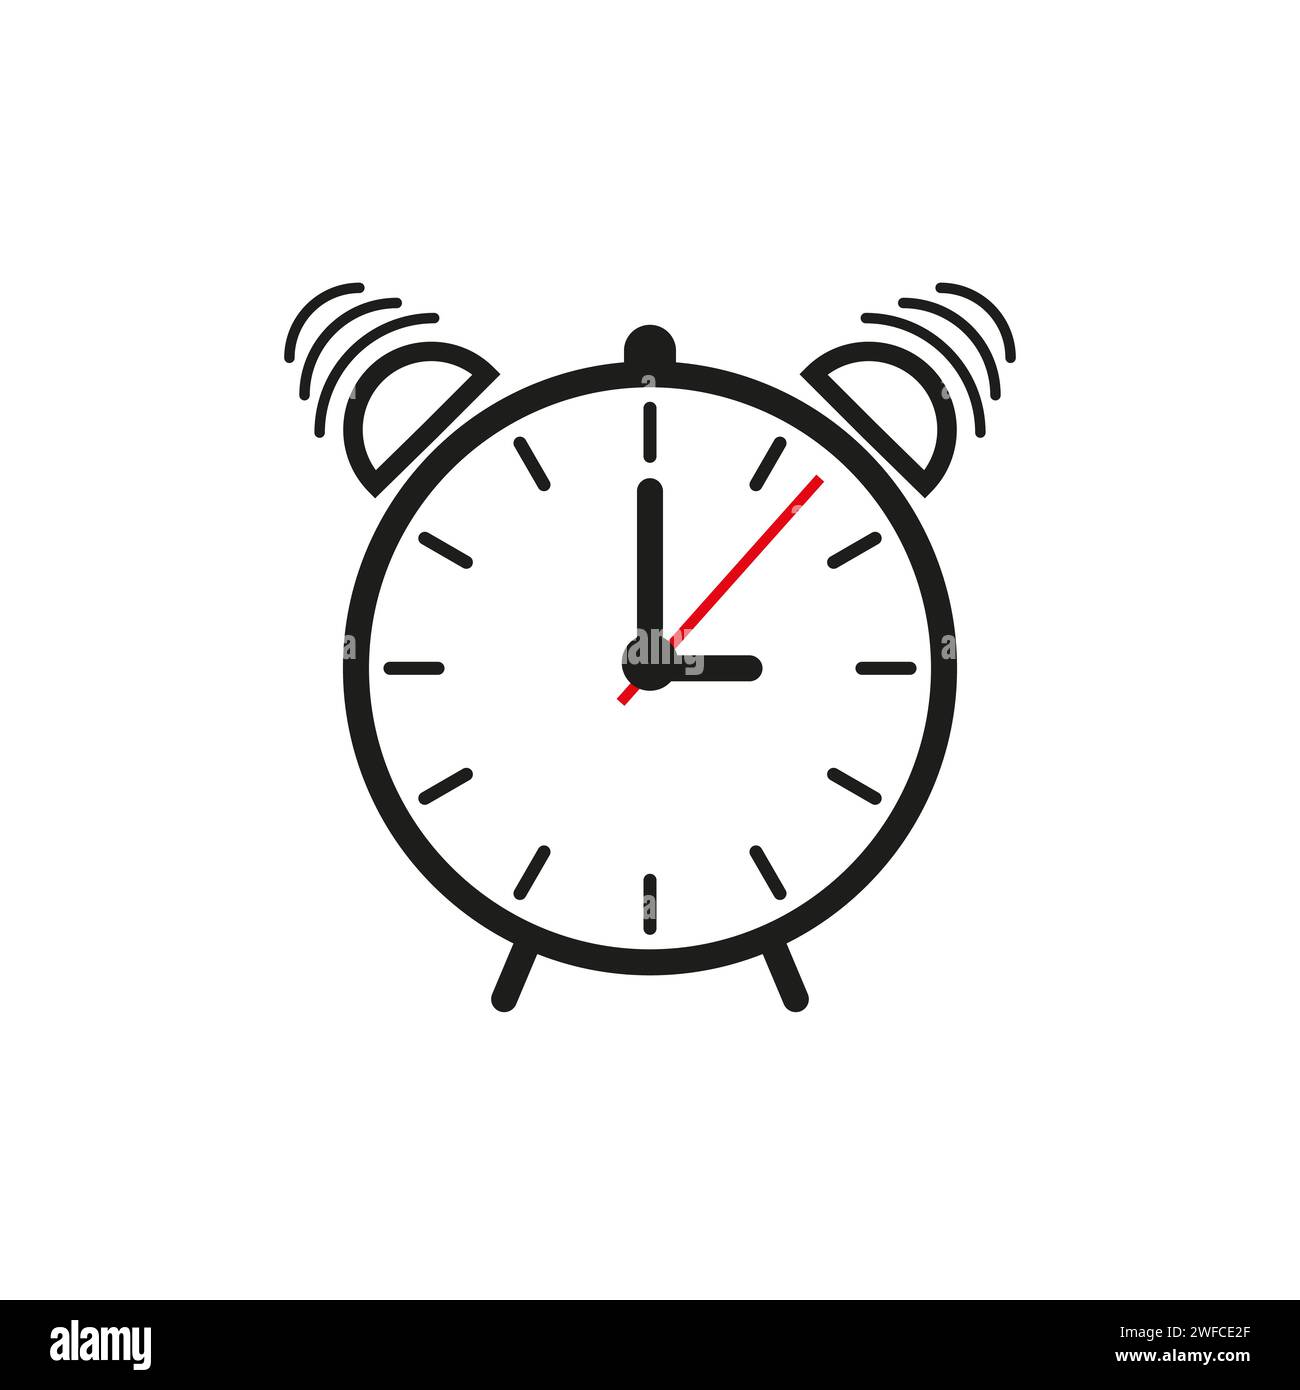 Reloj Despertador Clásico Analógico Negro BRAUN BC-03-B 